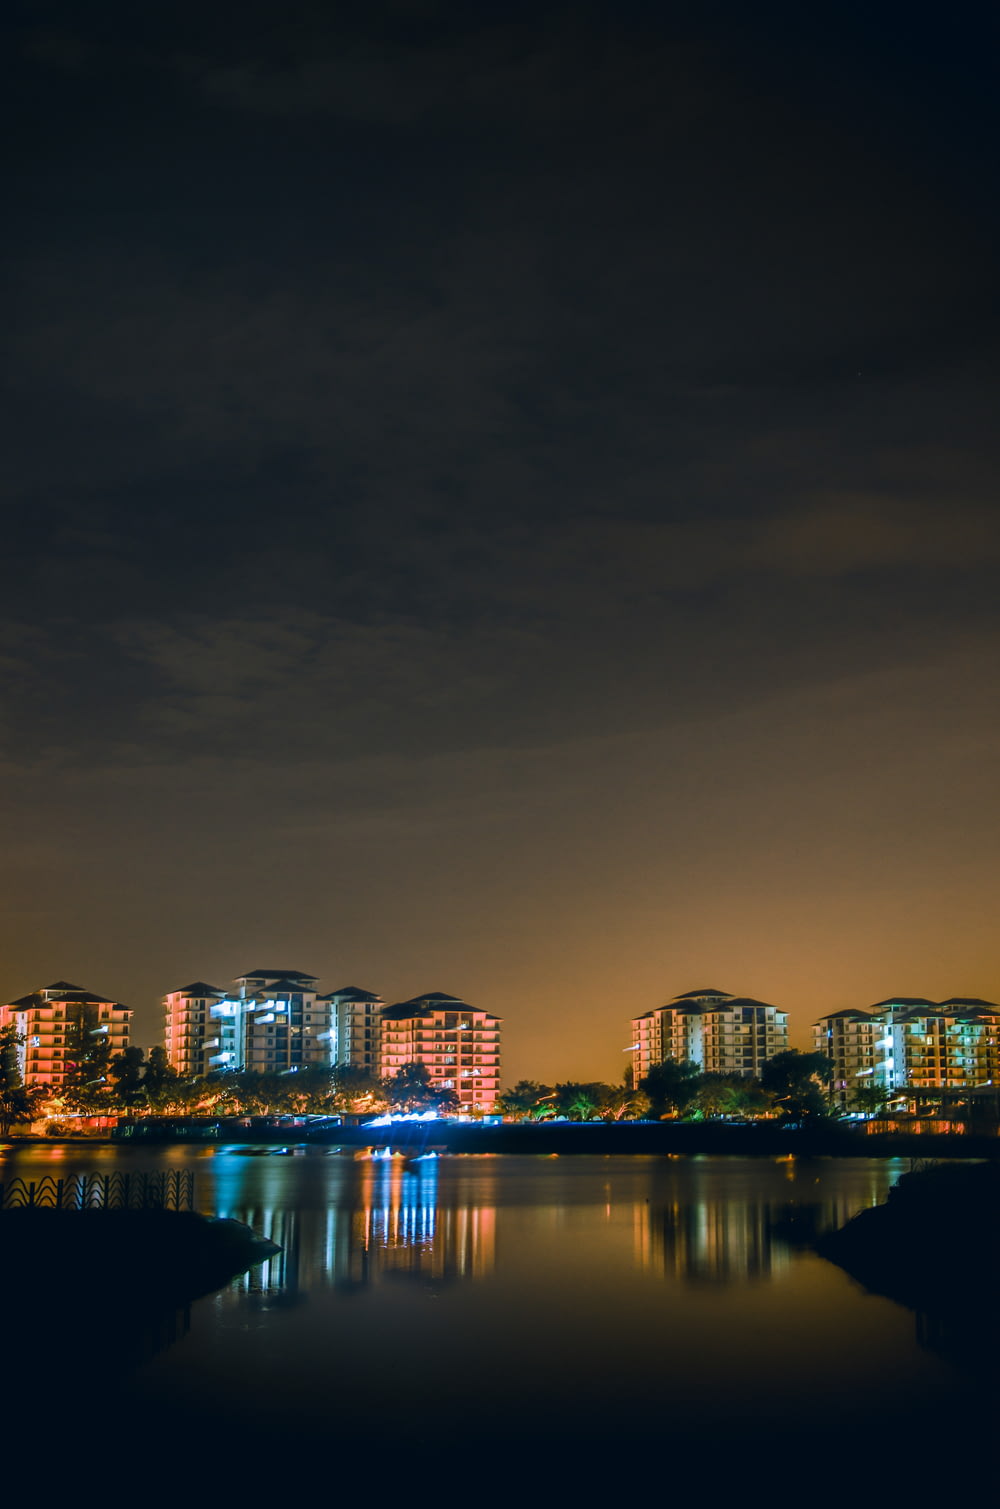 Reflexo do horizonte da cidade no corpo de água durante a noite